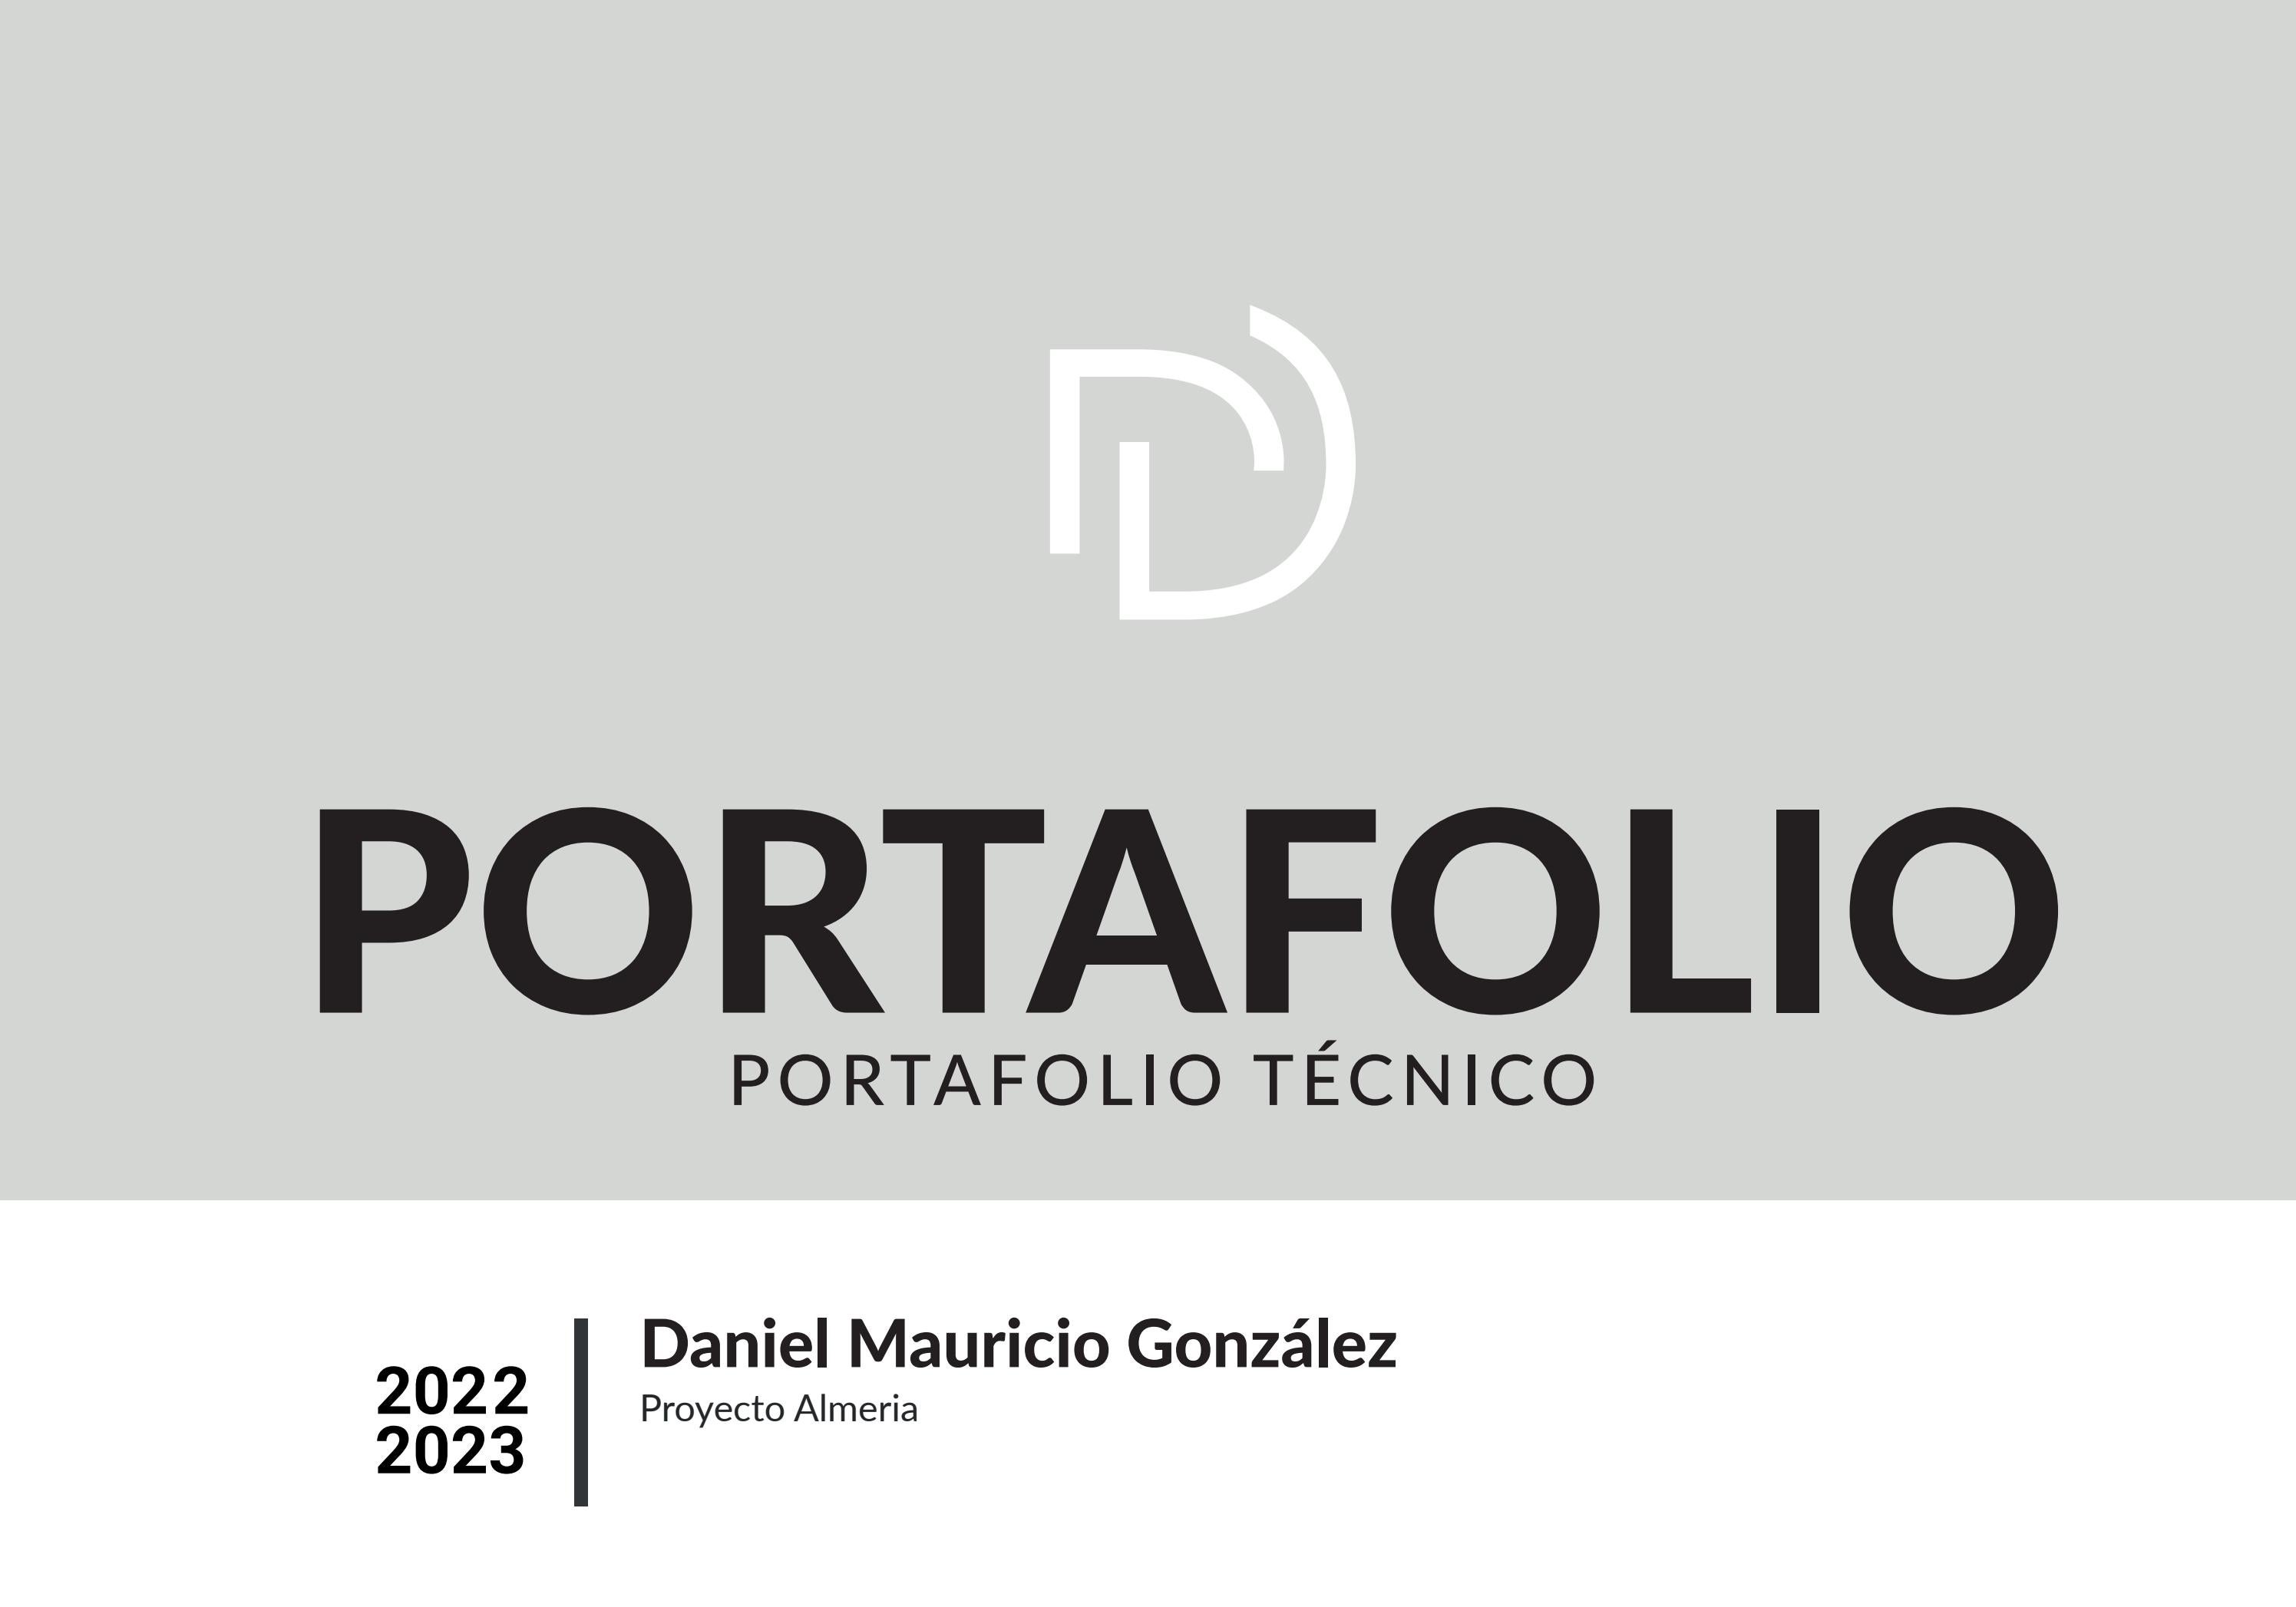 PORTAFOLIO

PORTAFOLIO TECNICO

Daniel Mauricio Gonzalez

Proyecto Almeria

2022
2023